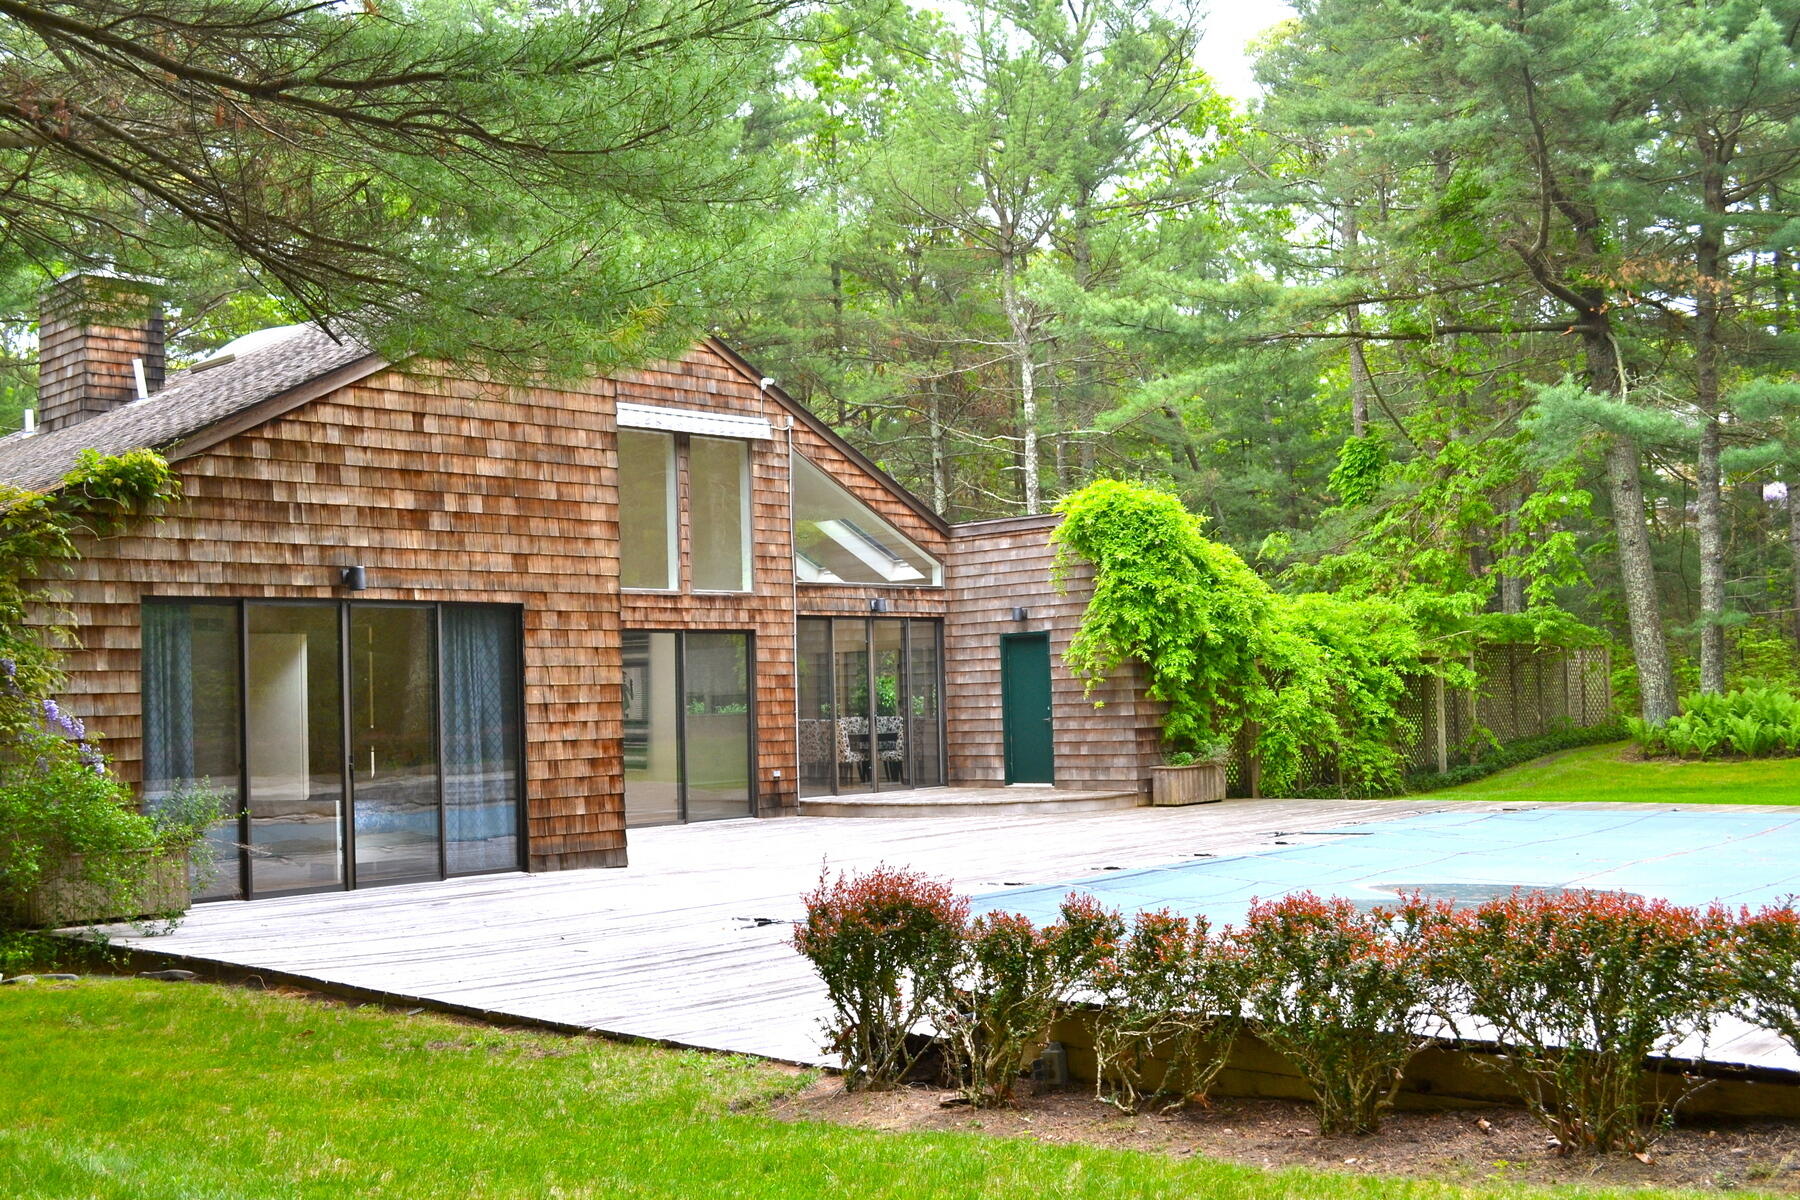 Rental Property at East Hampton, East Hampton, Hamptons, NY - Bedrooms: 4 
Bathrooms: 4  - $50,000 MO.